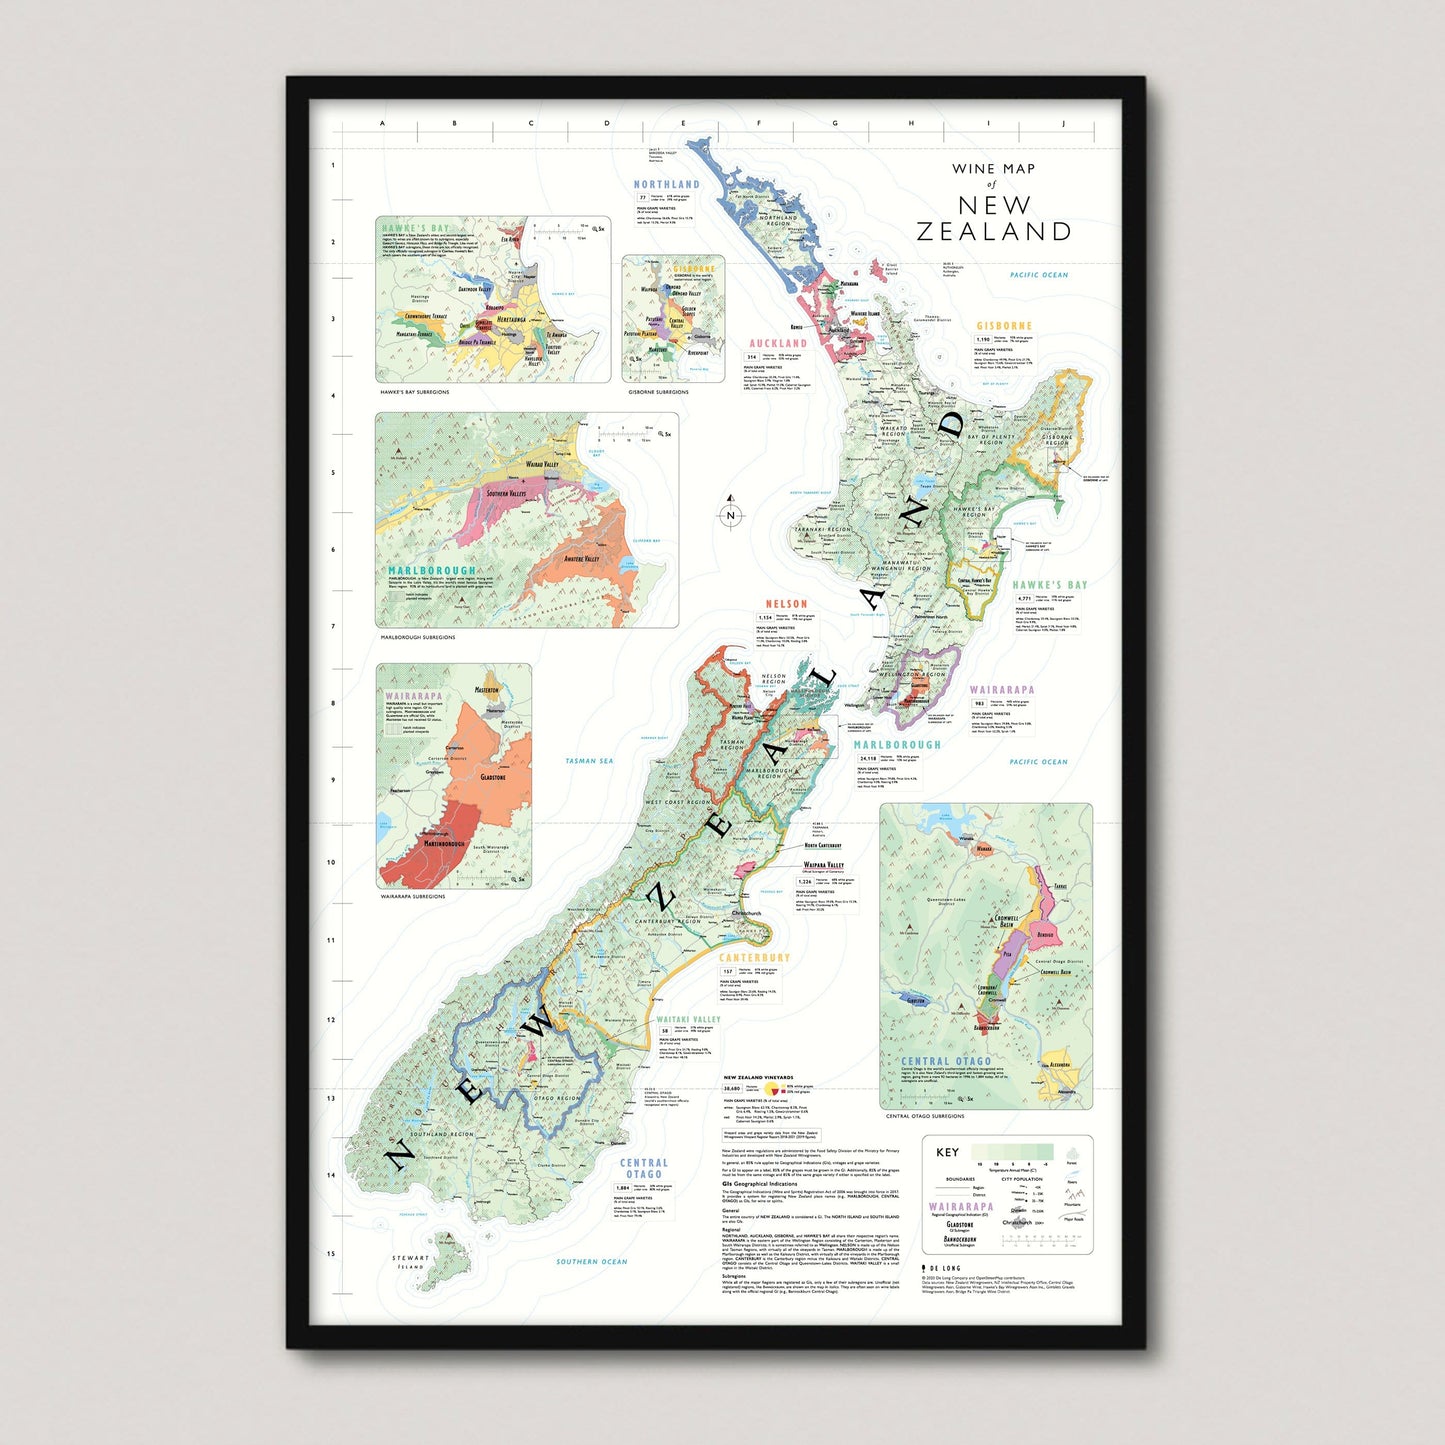 Wine Map of New Zealand framed